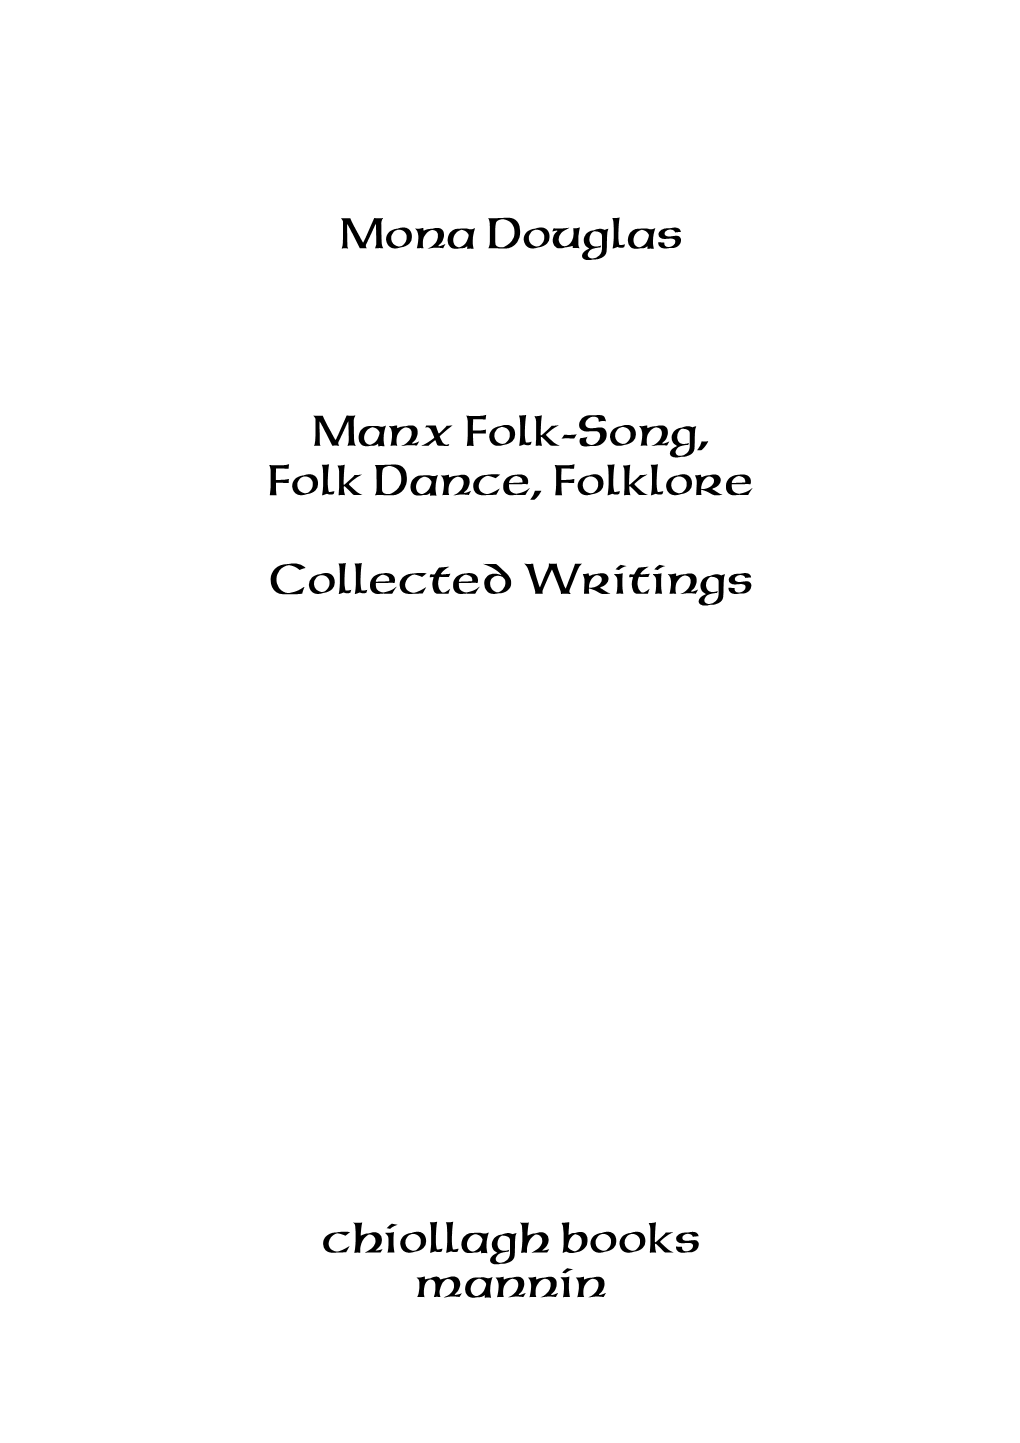 Mona Douglas Manx Folk-Song, Folk Dance, Folklore Collected Writings Chiollagh Books Mannin